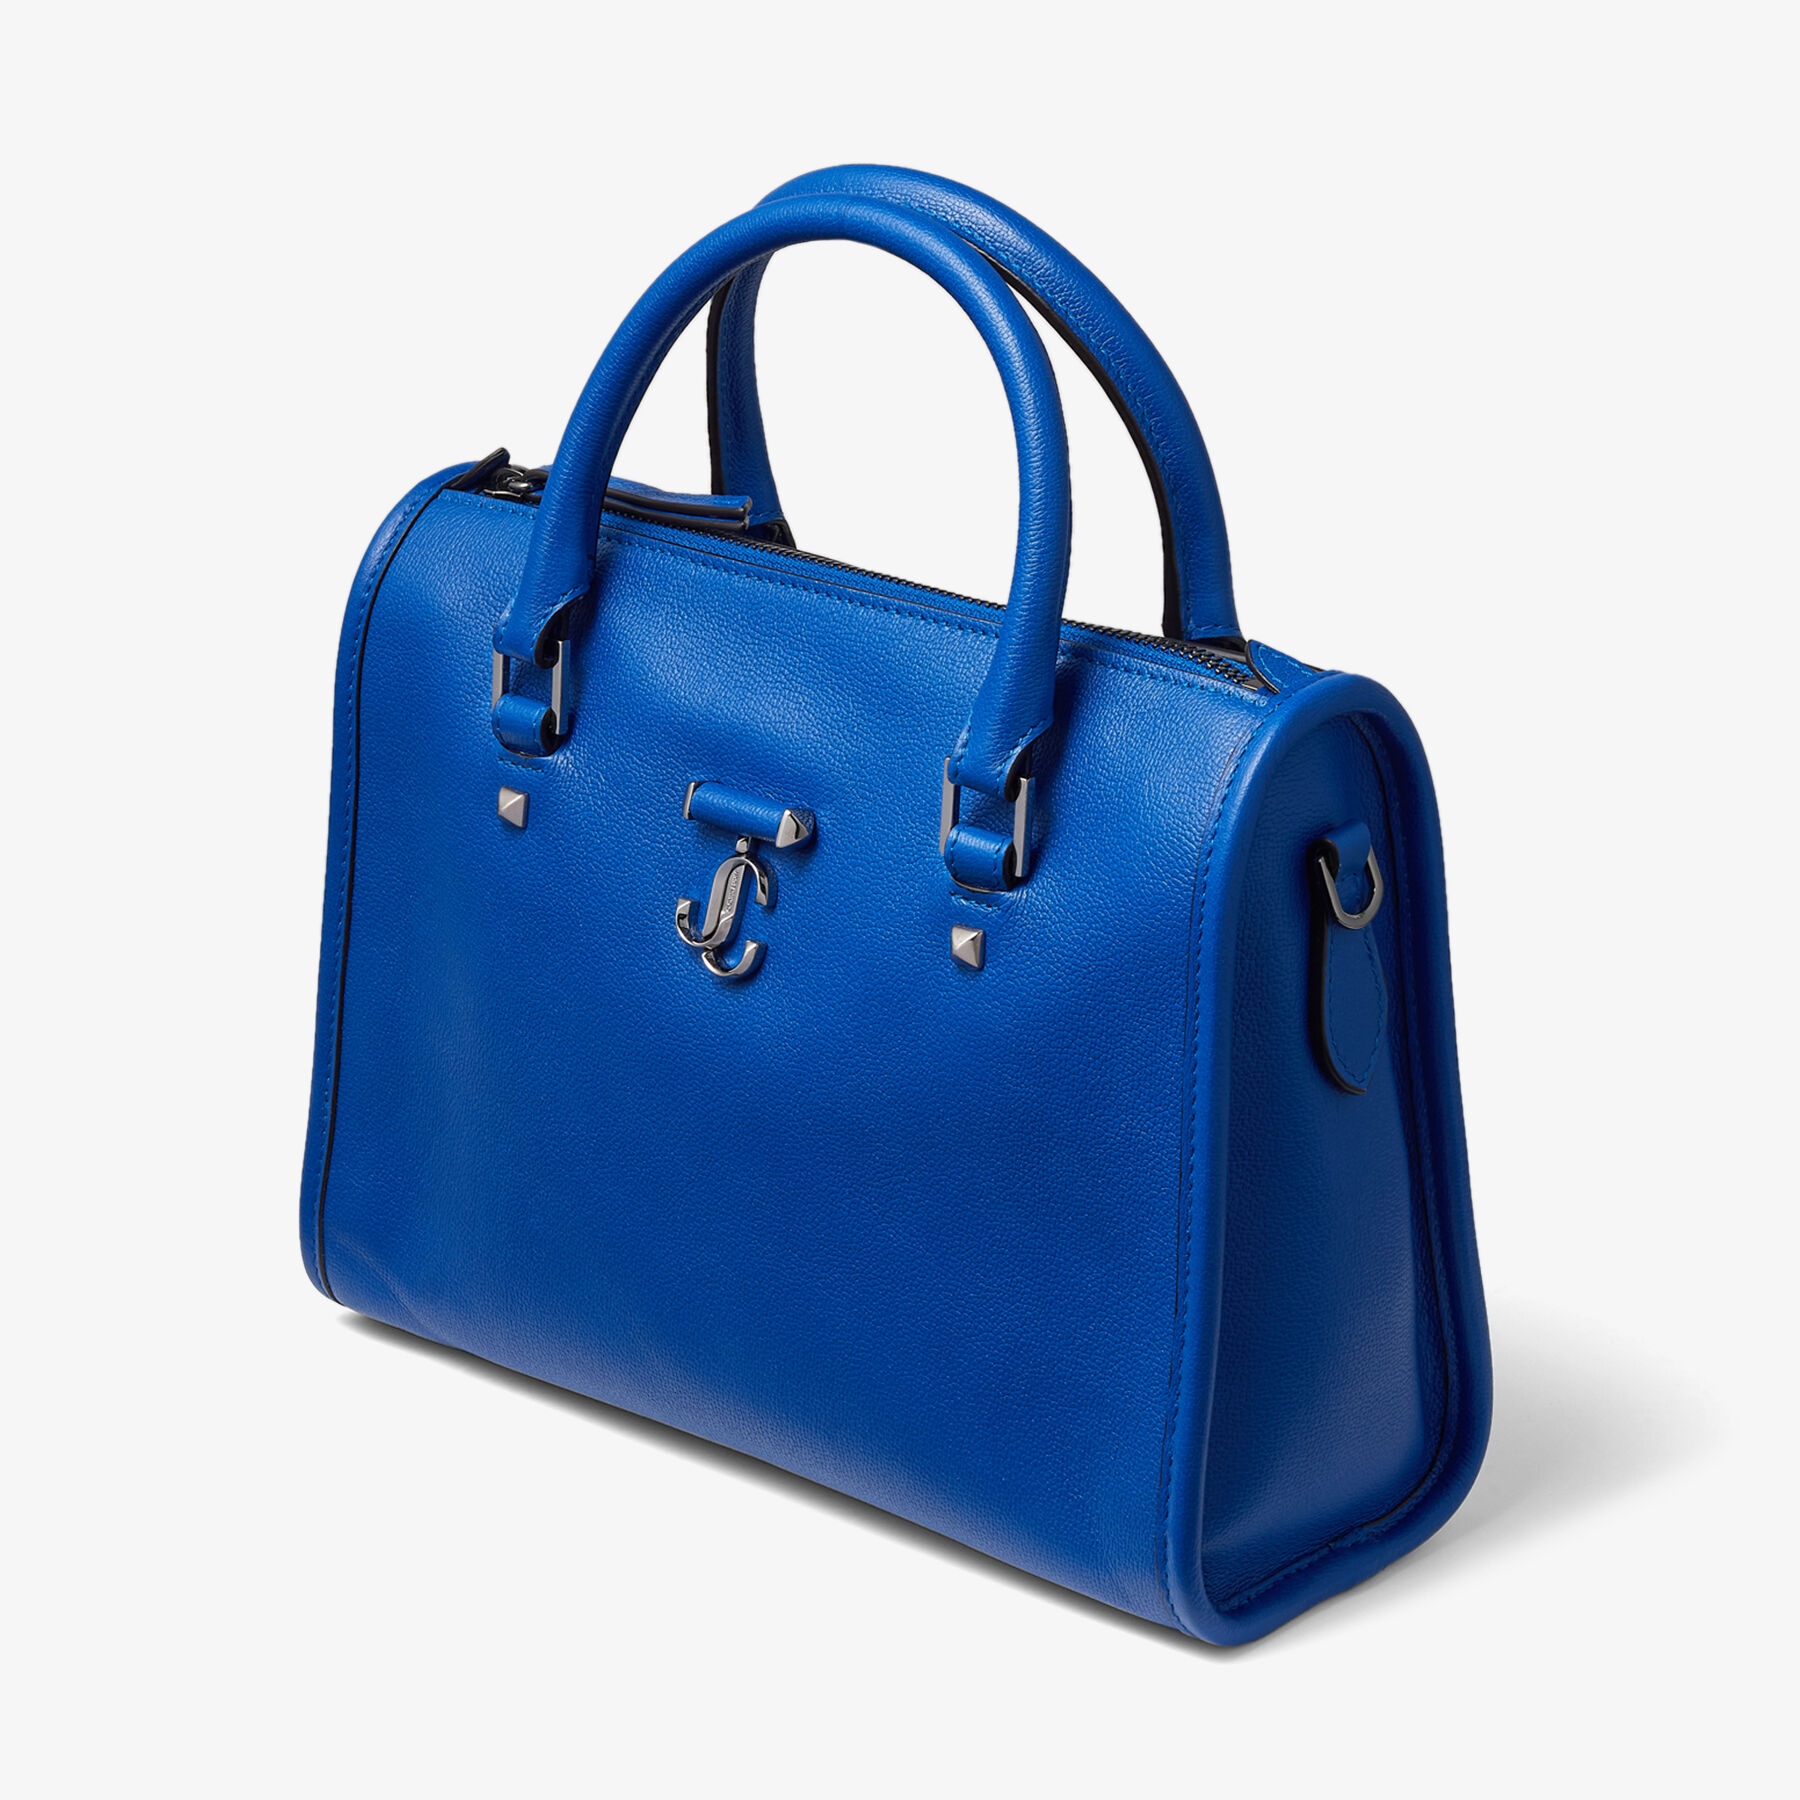 Webb Top Handle S
Ultraviolet Fine Grainy Calf Leather Top Handle Bag - 4